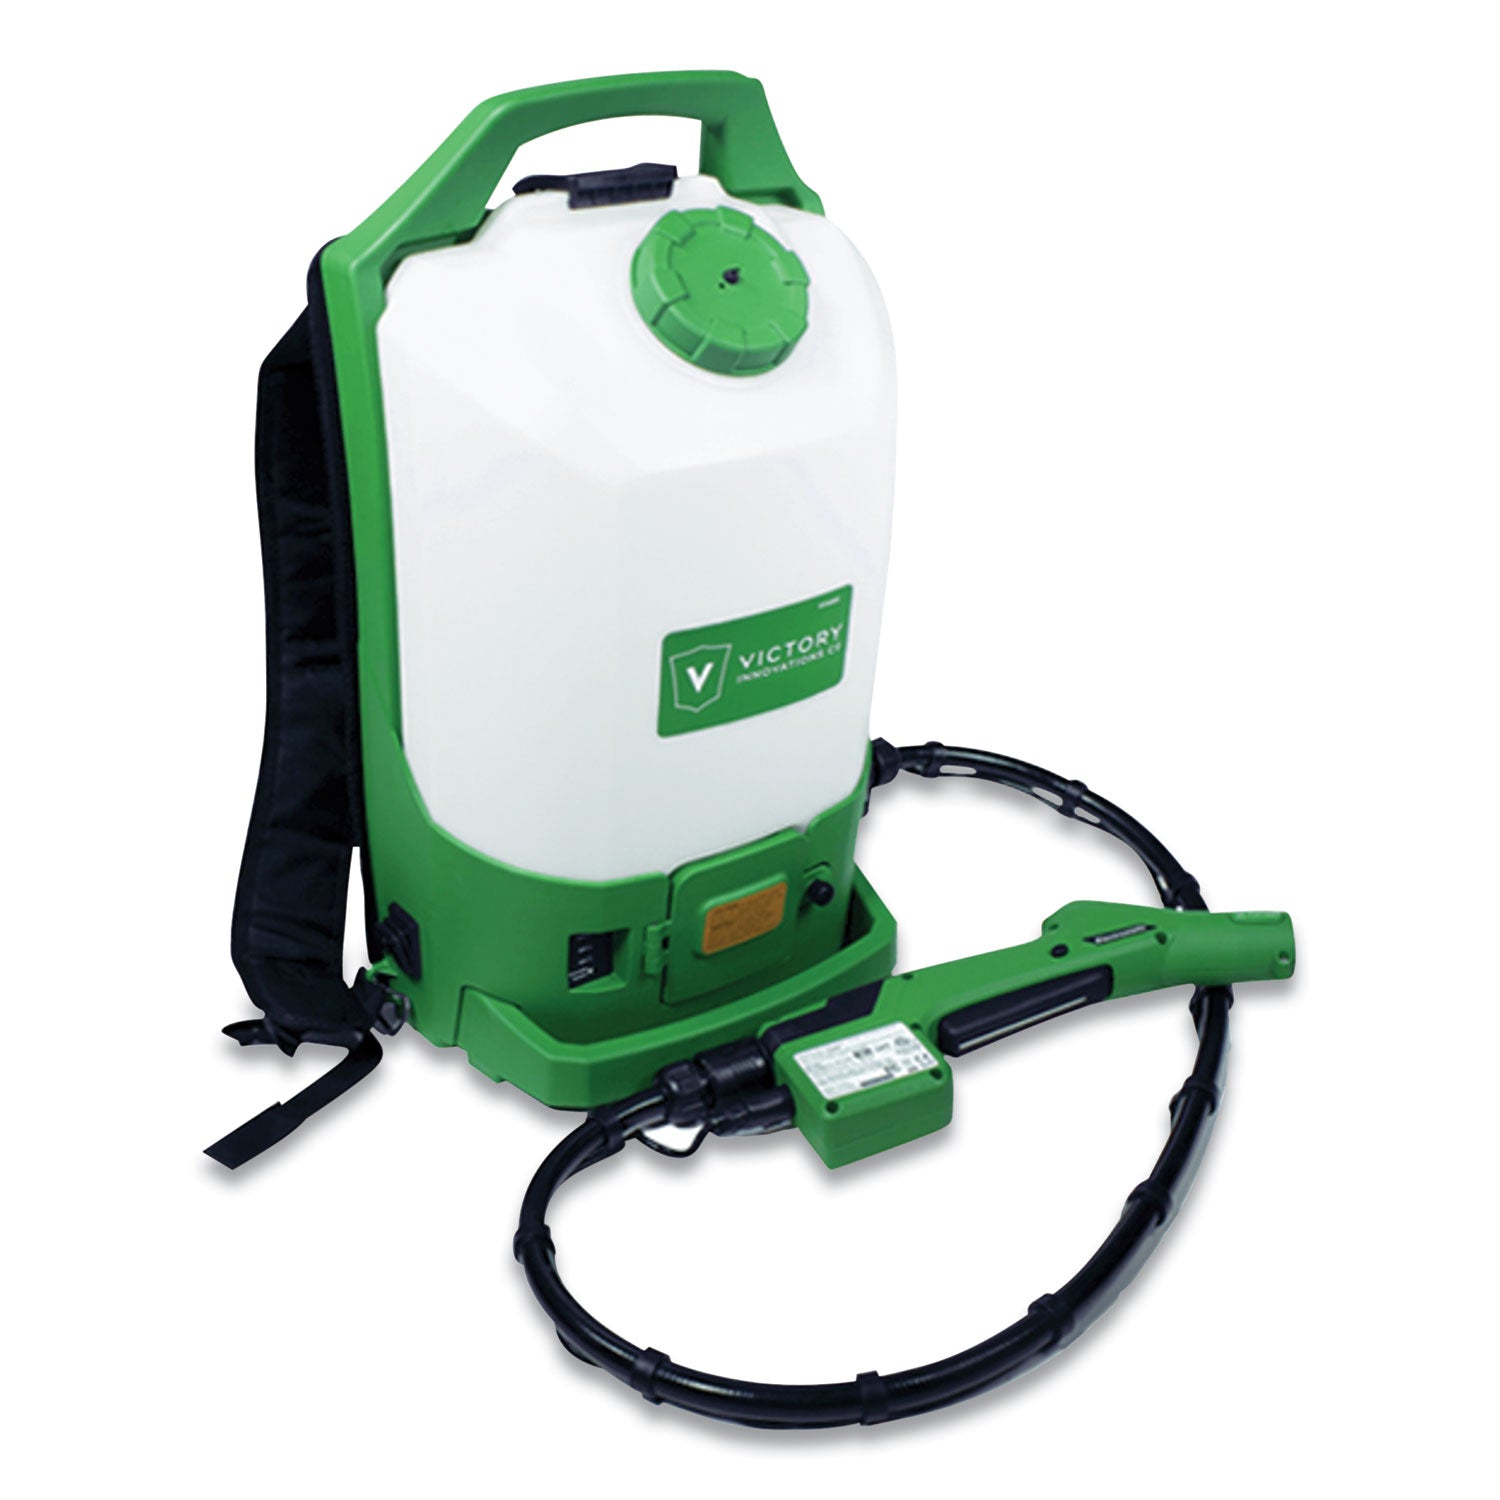 professional-cordless-electrostatic-backpack-sprayer-225-gal-065-x-48-hose-green-translucent-white-black_vivvp300esk - 2